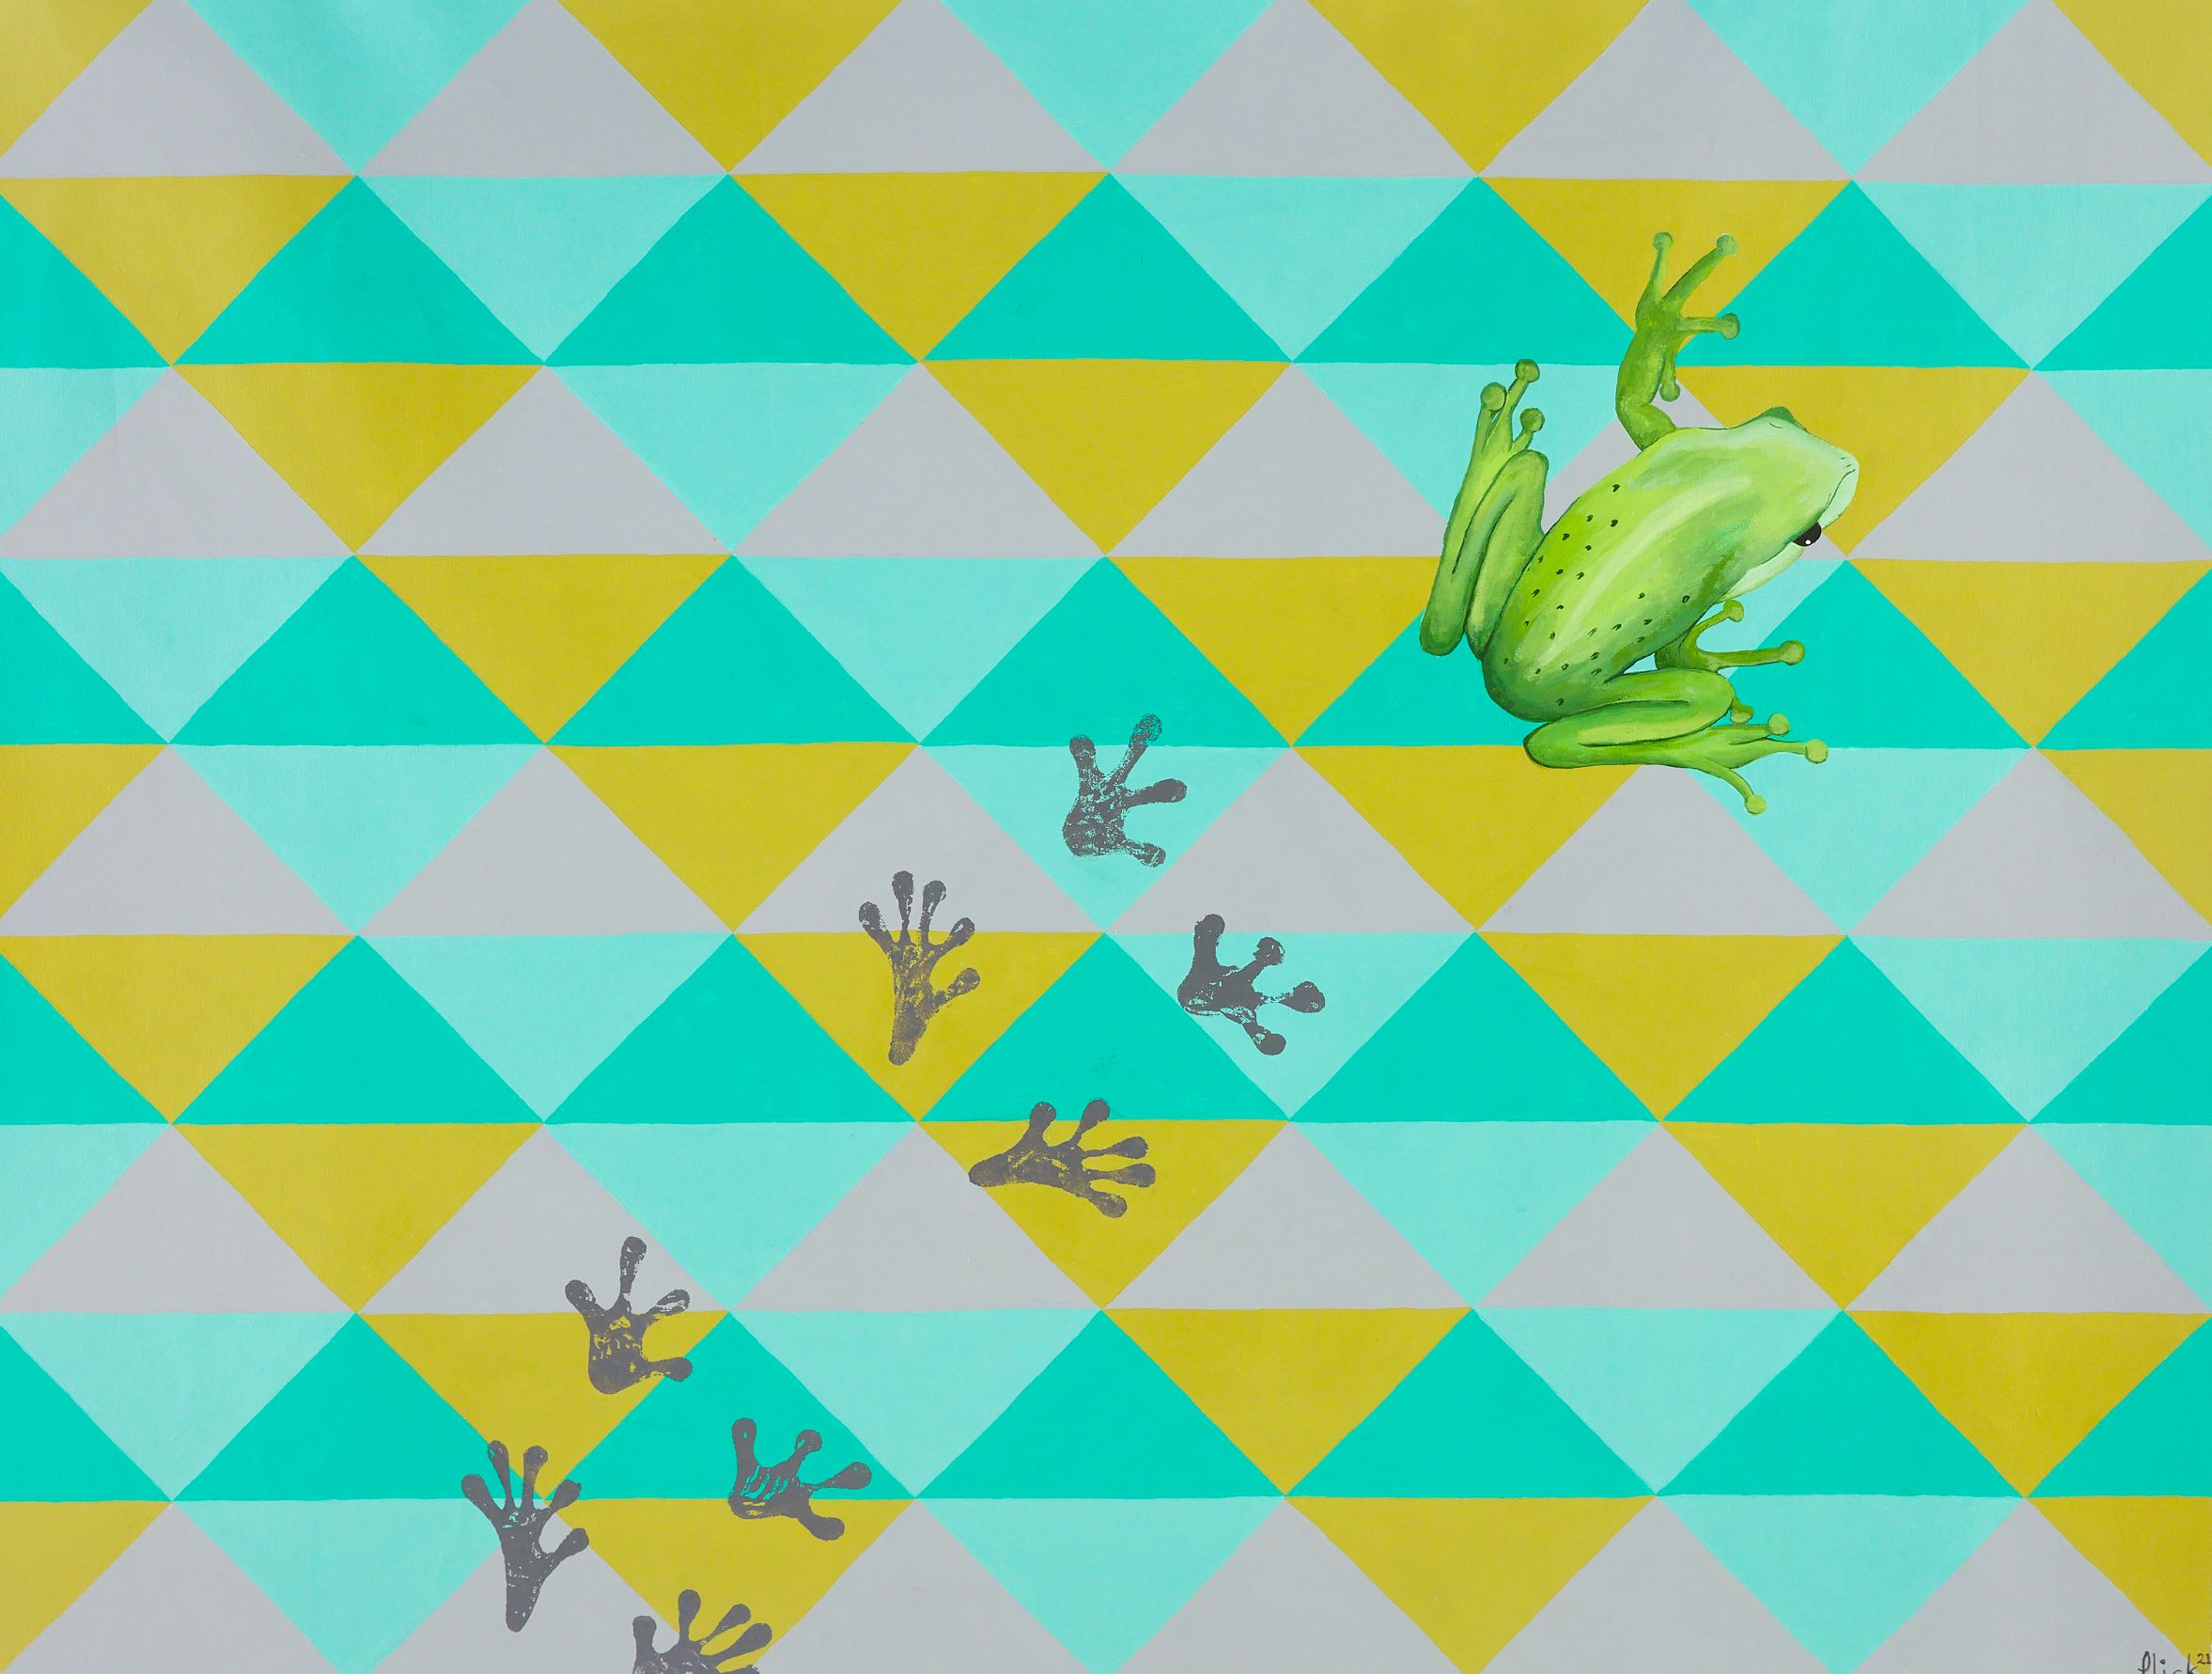 Painting acrylic on canvas frog Tiddalick